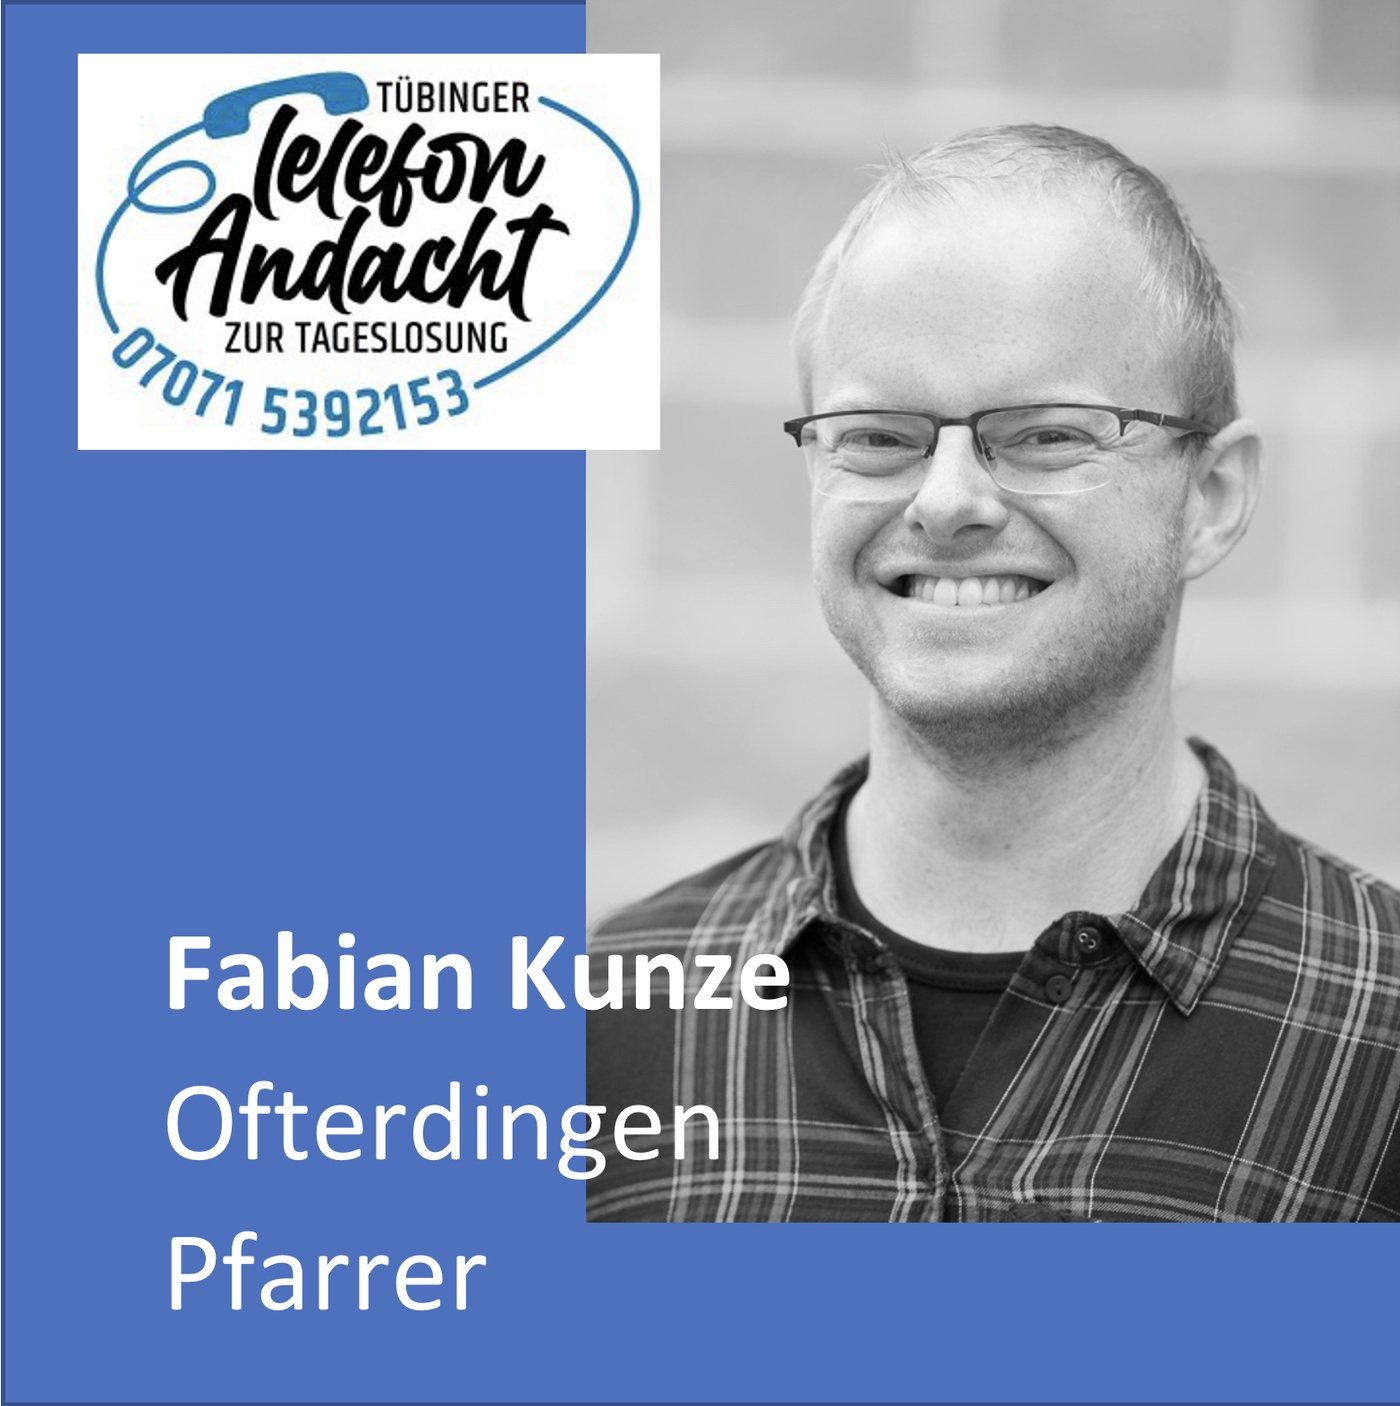 23 03 21 Fabian Kunze